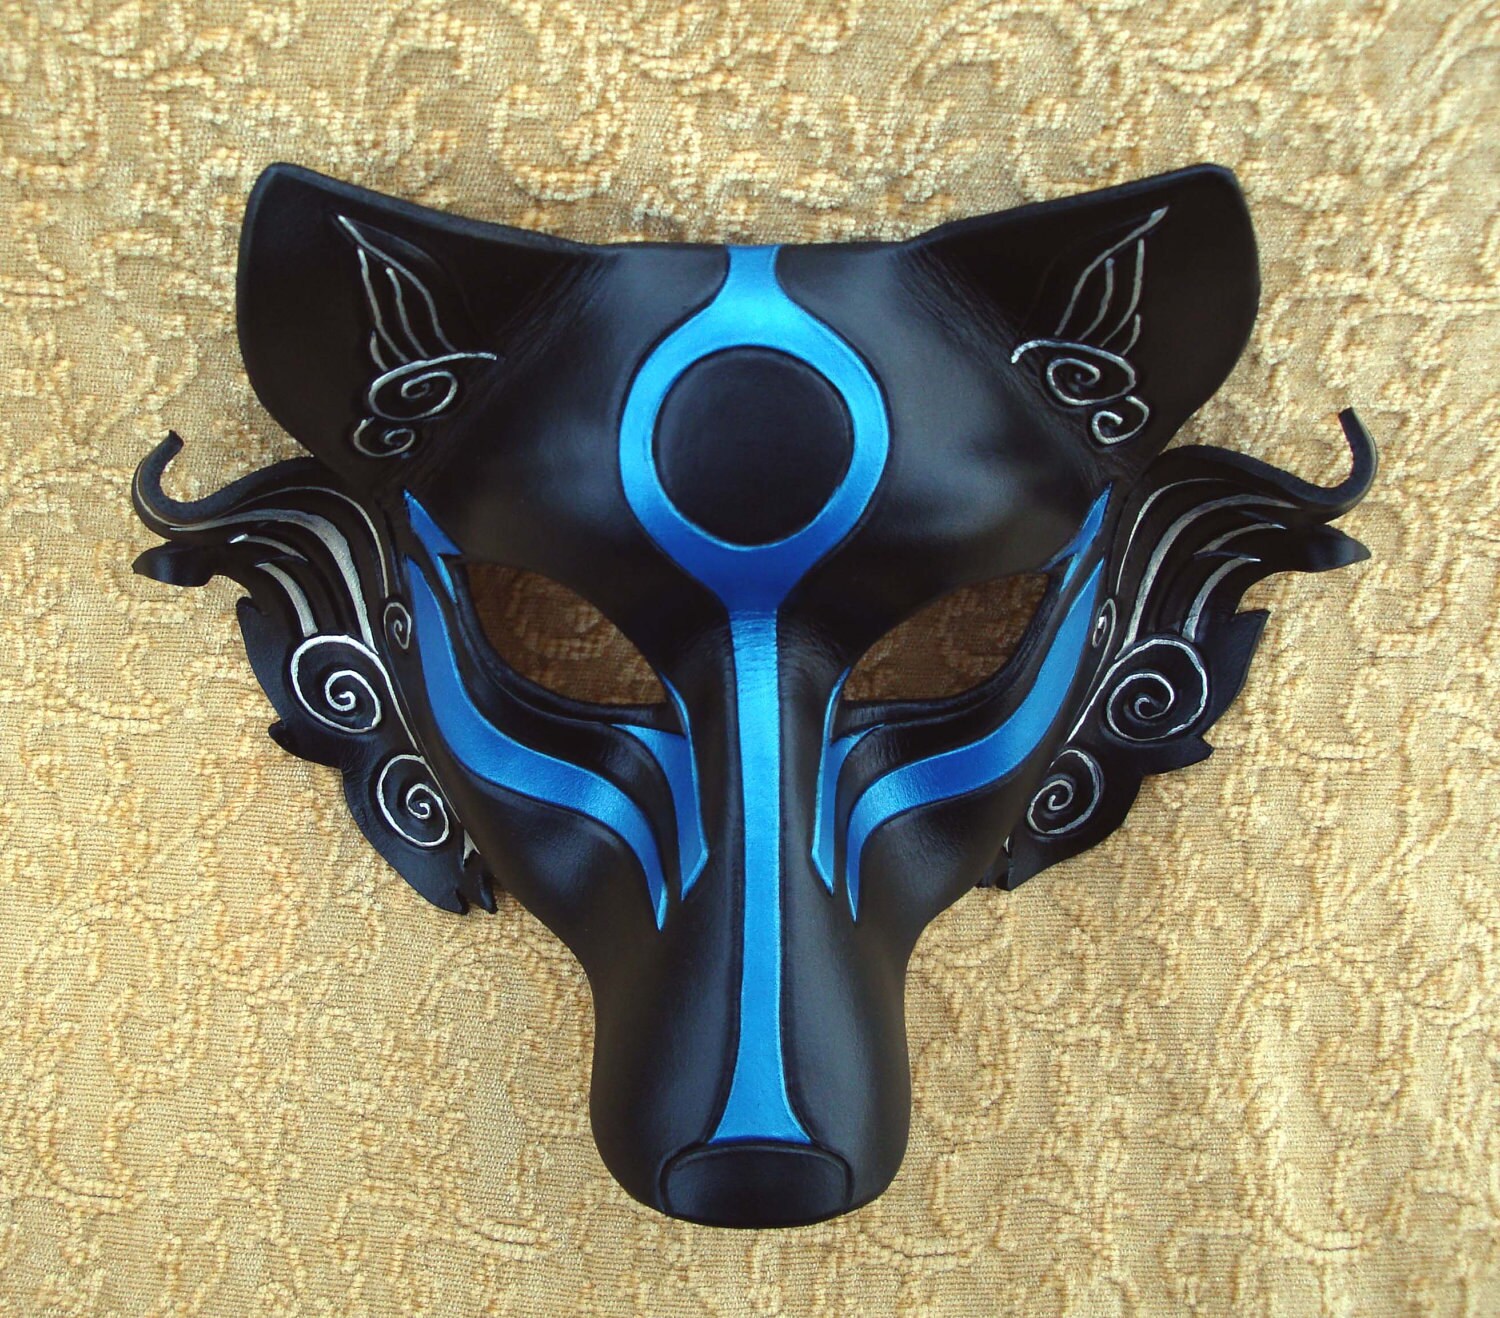 Black Okami leather mask ...handmade Japanese wolf mask in